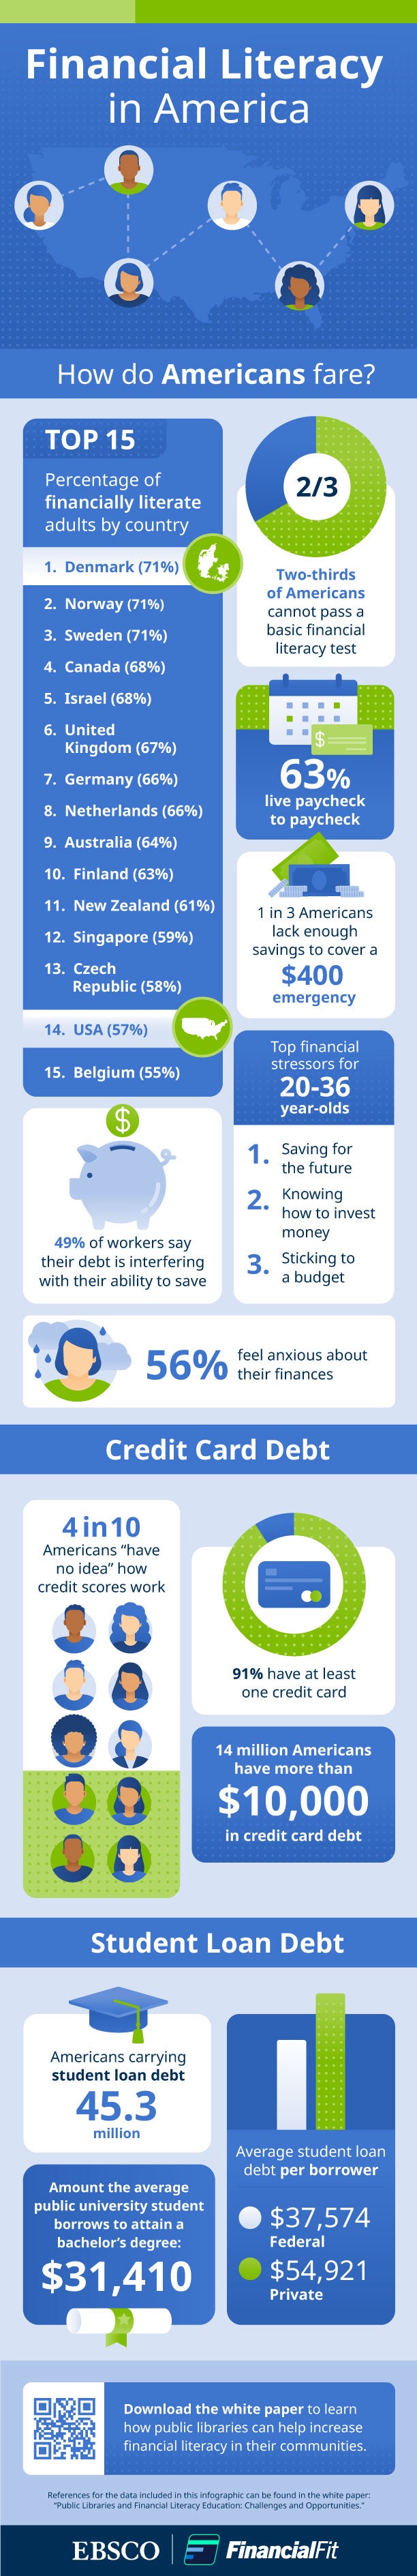 EBSCO FinancialFit Financial Literacy In America Infographic   